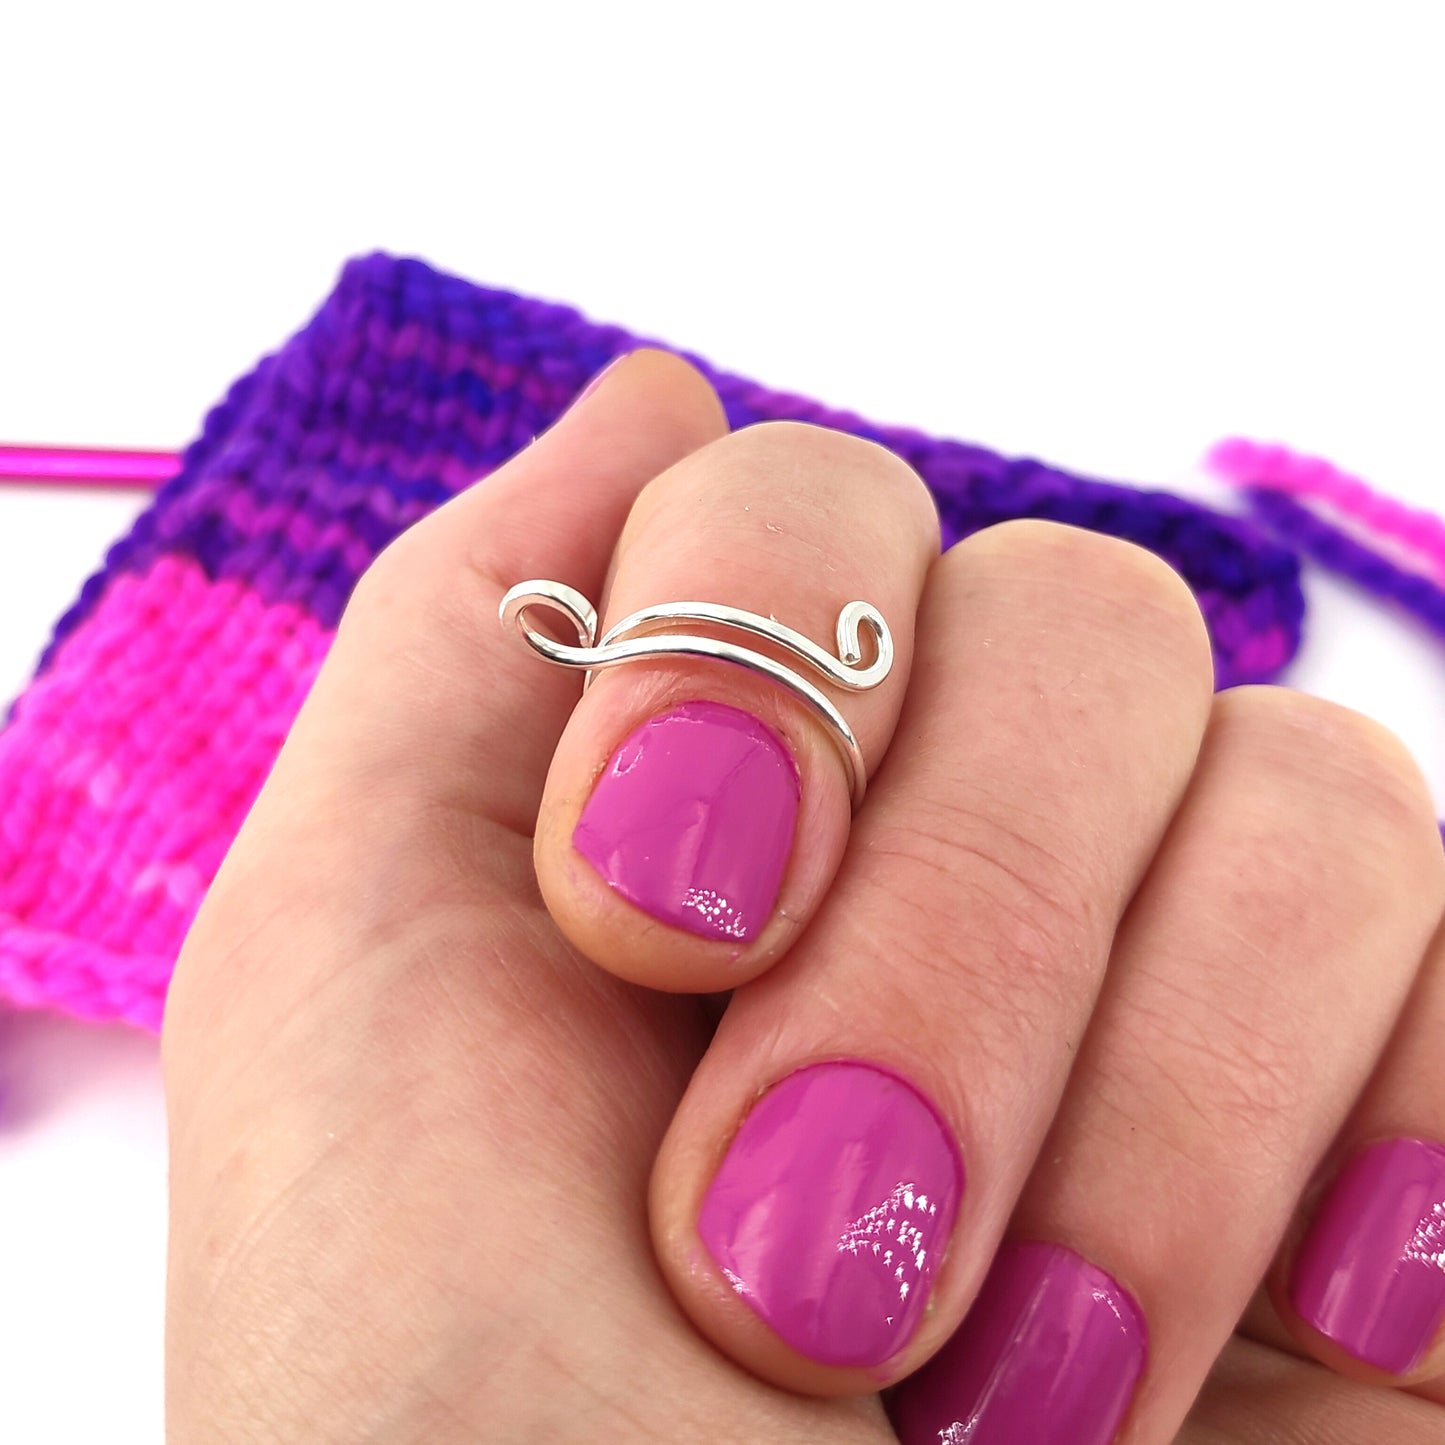 Yarn Ring in Silver - "Swirly"